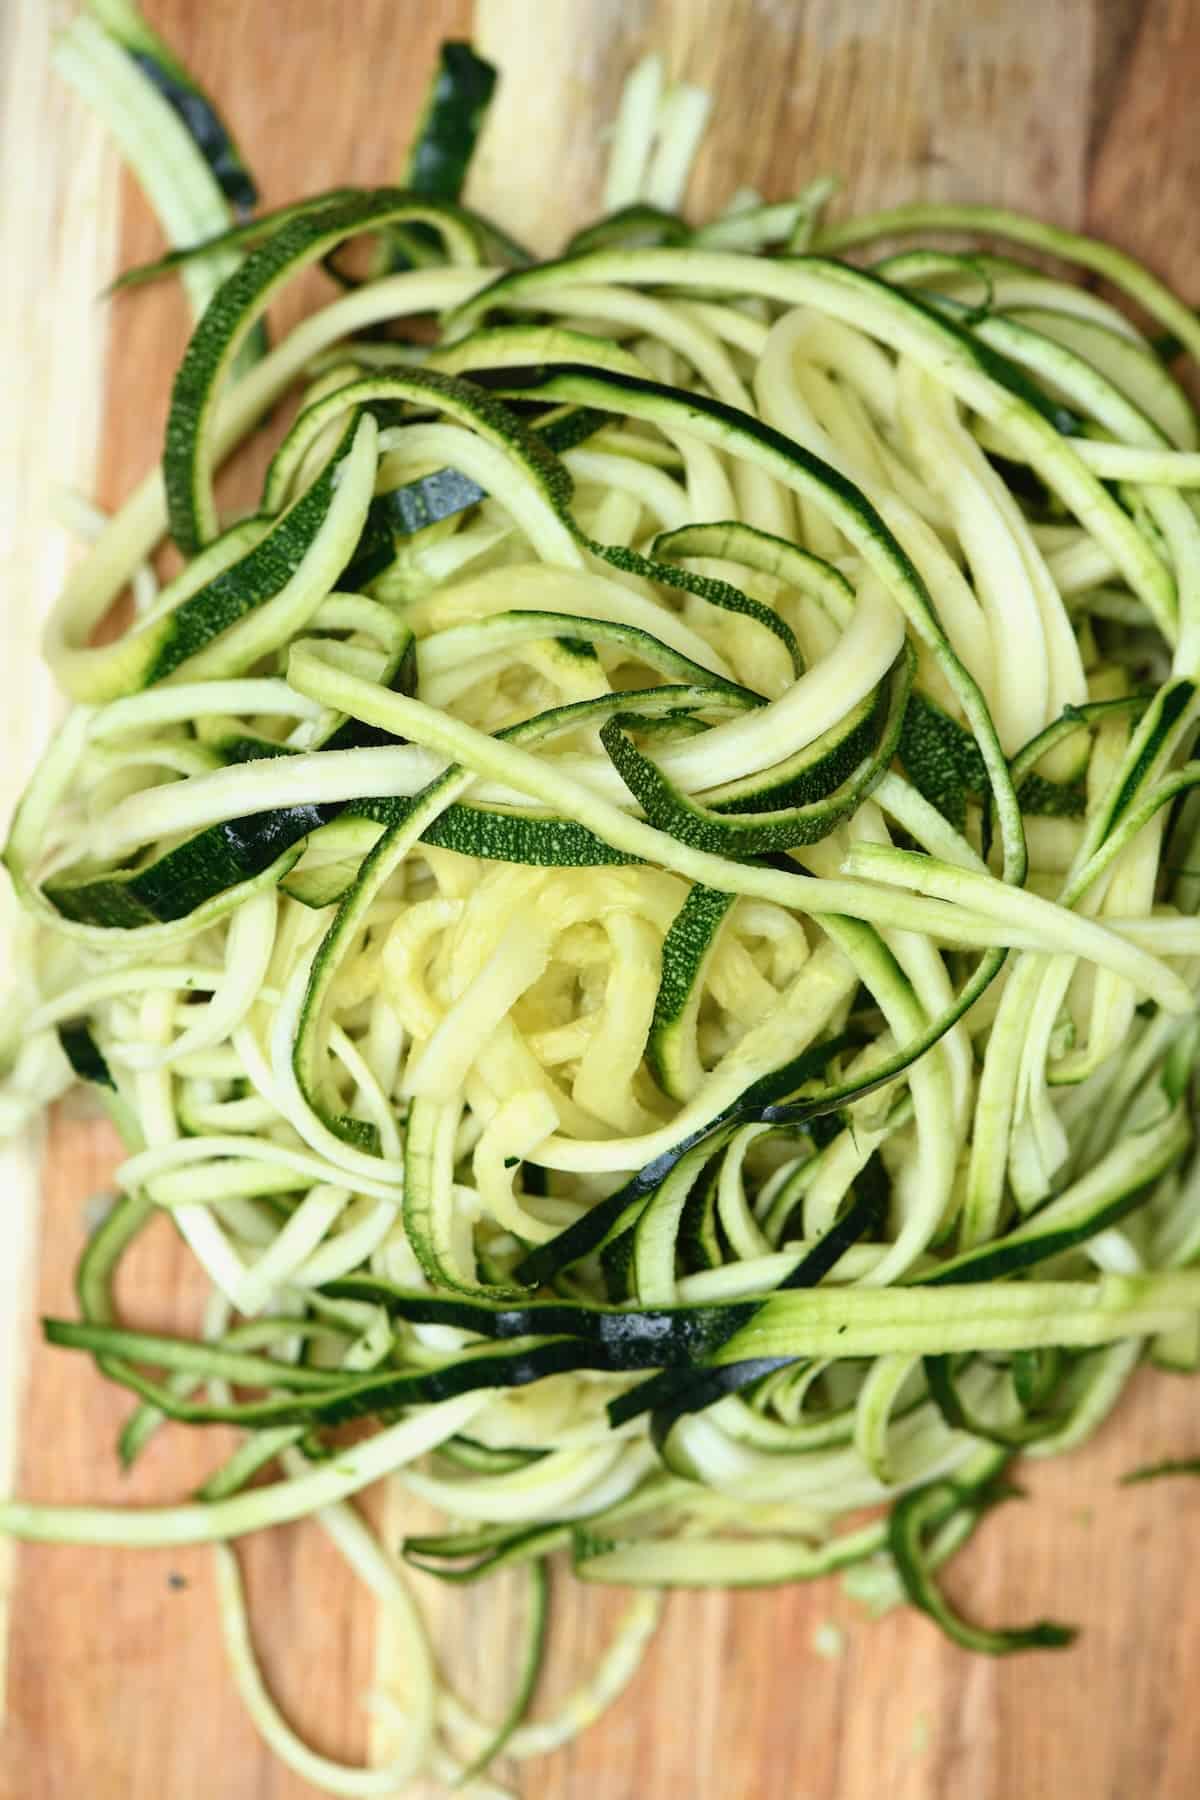 Zucchini cut into noodles